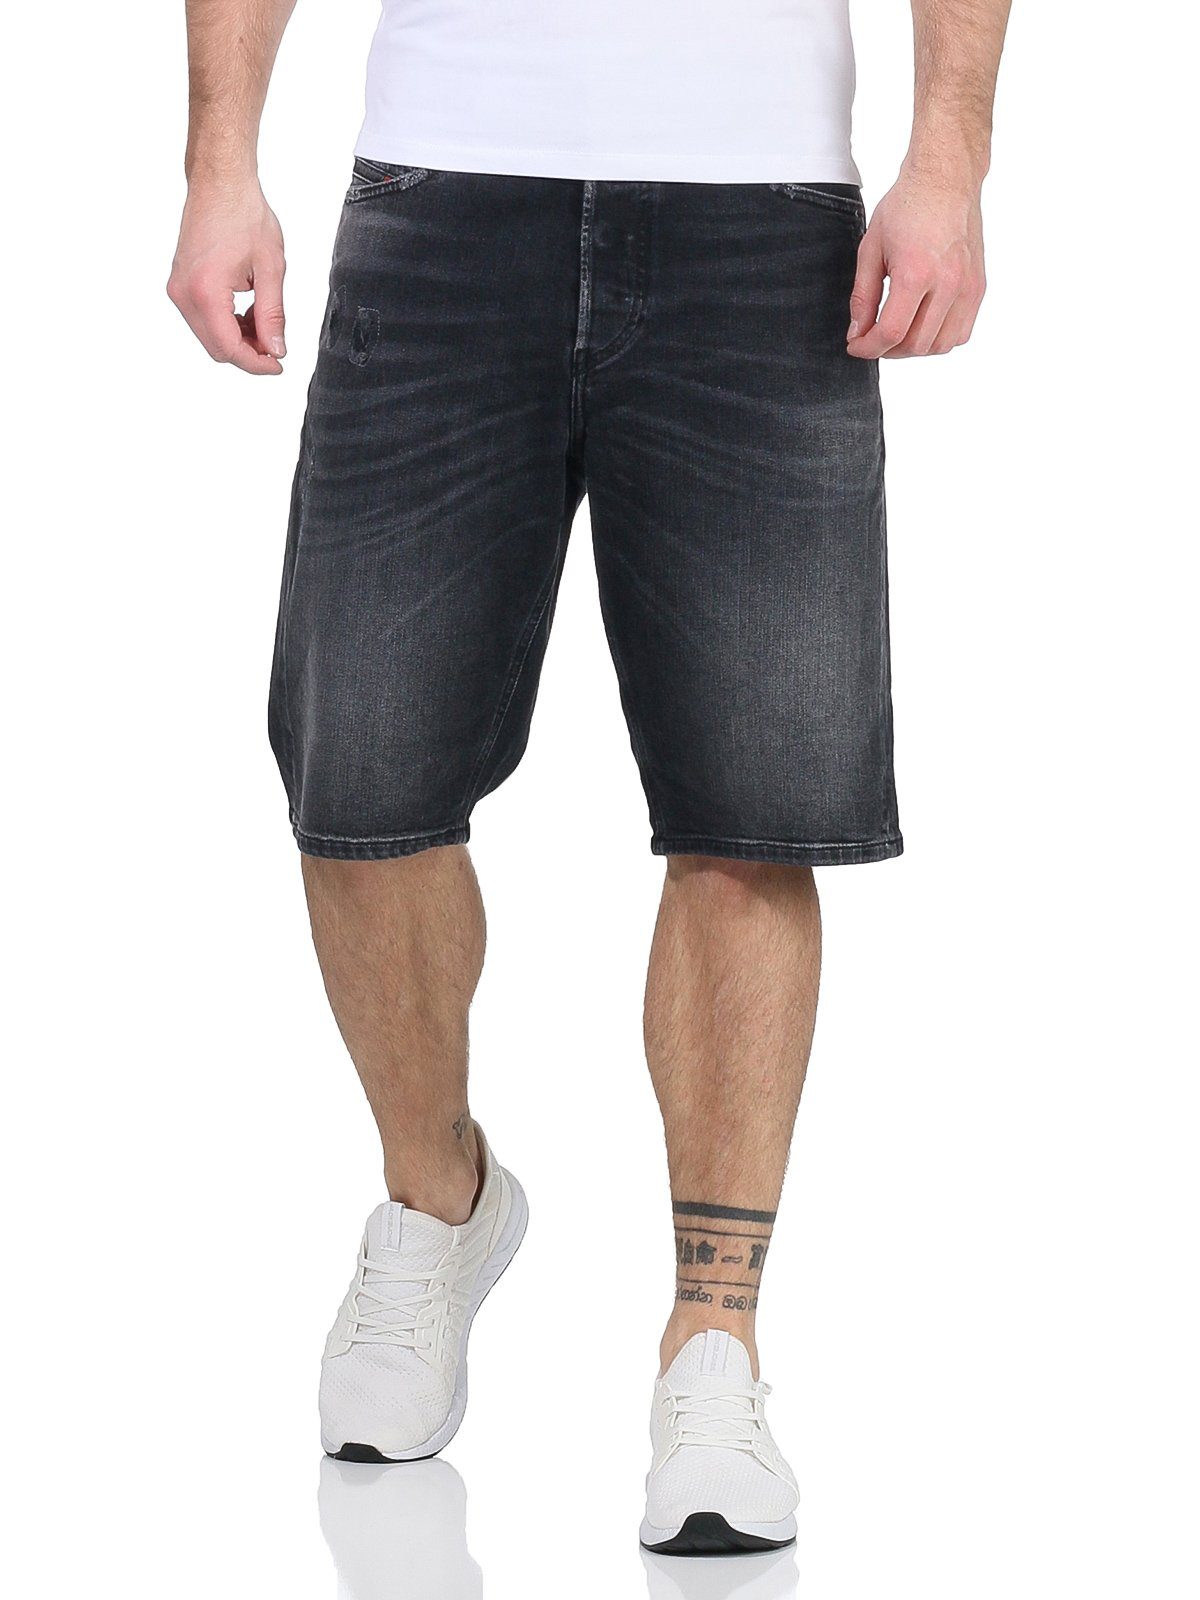 Shorts, Jeansshorts Shorts dezenter Used-Look Hose RG48R Diesel Kroshort Anthrazit Herren R930L Jeans kurze